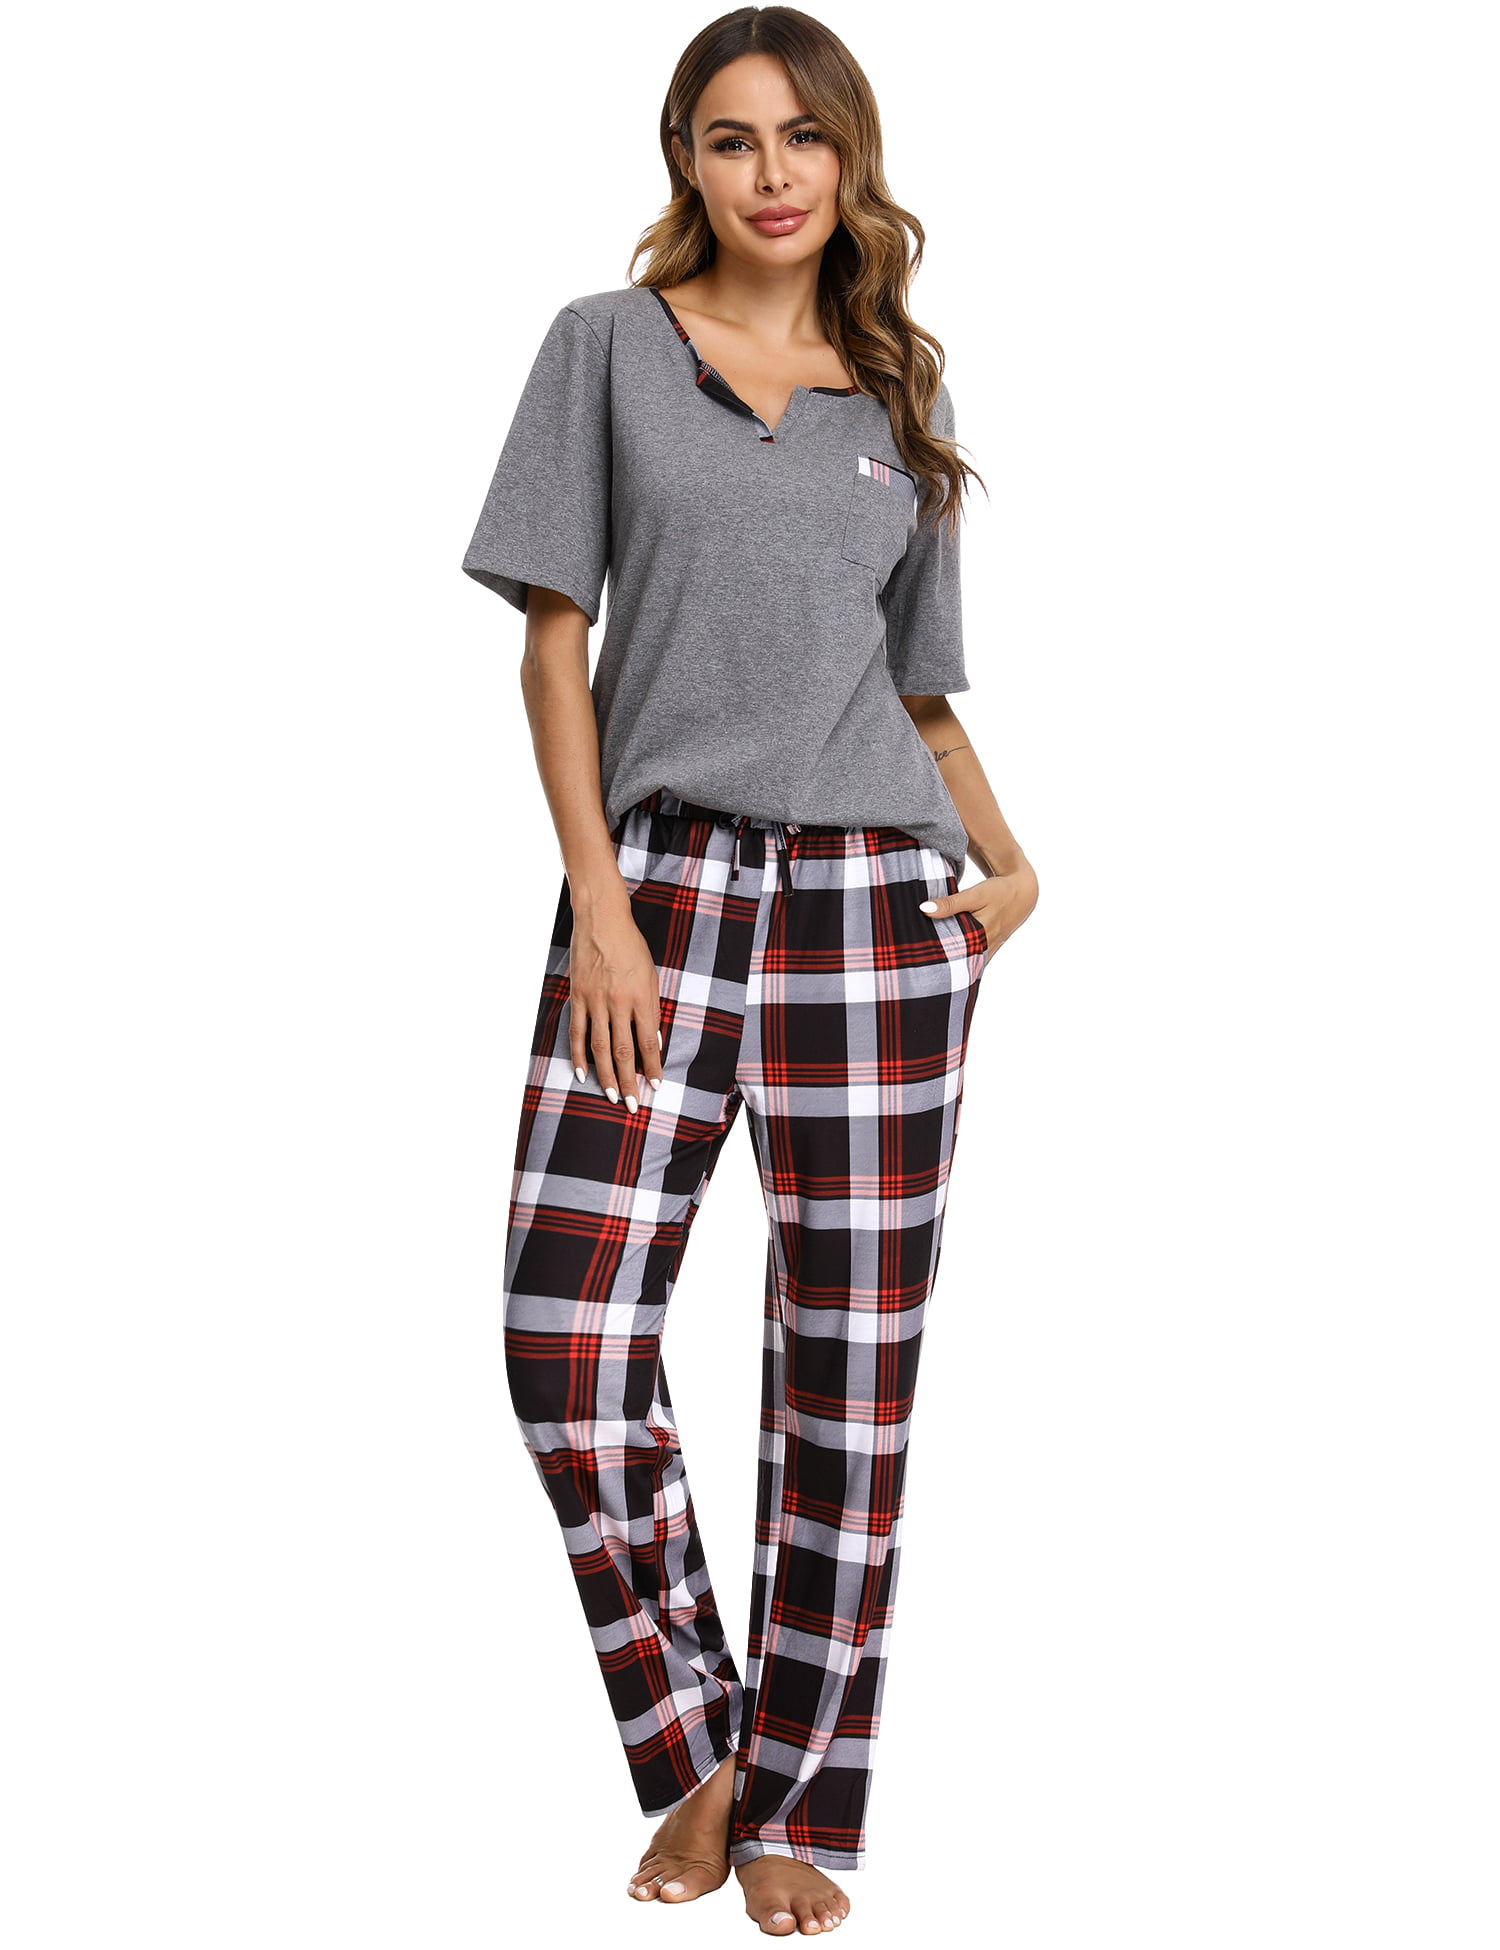 Litherday Men's Pyjamas Sets Cotton Long Sleeve Nightwear Sleepwear Pjs Set Soft Top & Plaid Bottoms Lounge Wear with Pockets 